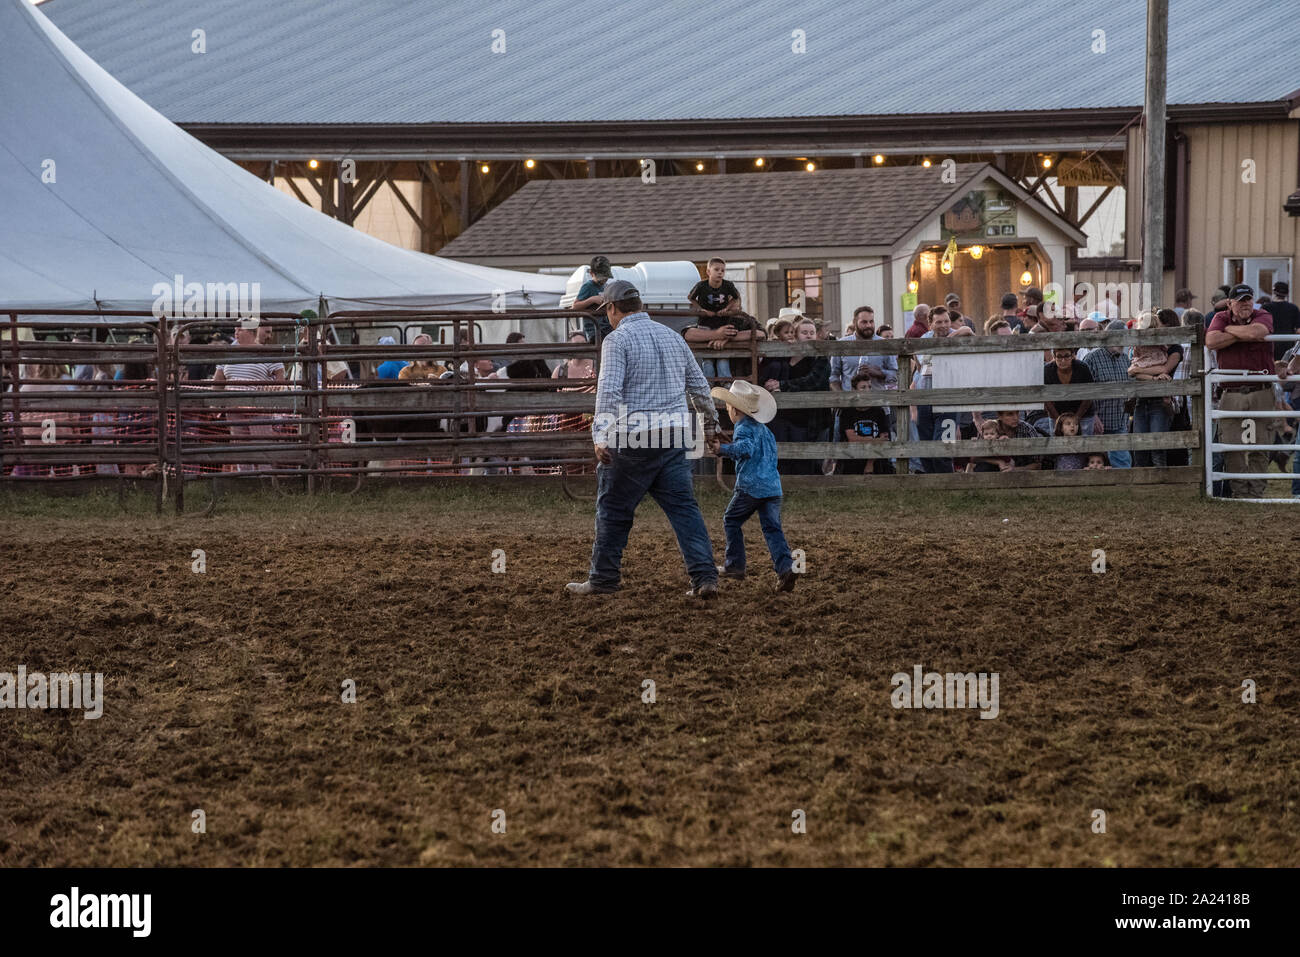 Country fair calf roping contest. Stock Photo